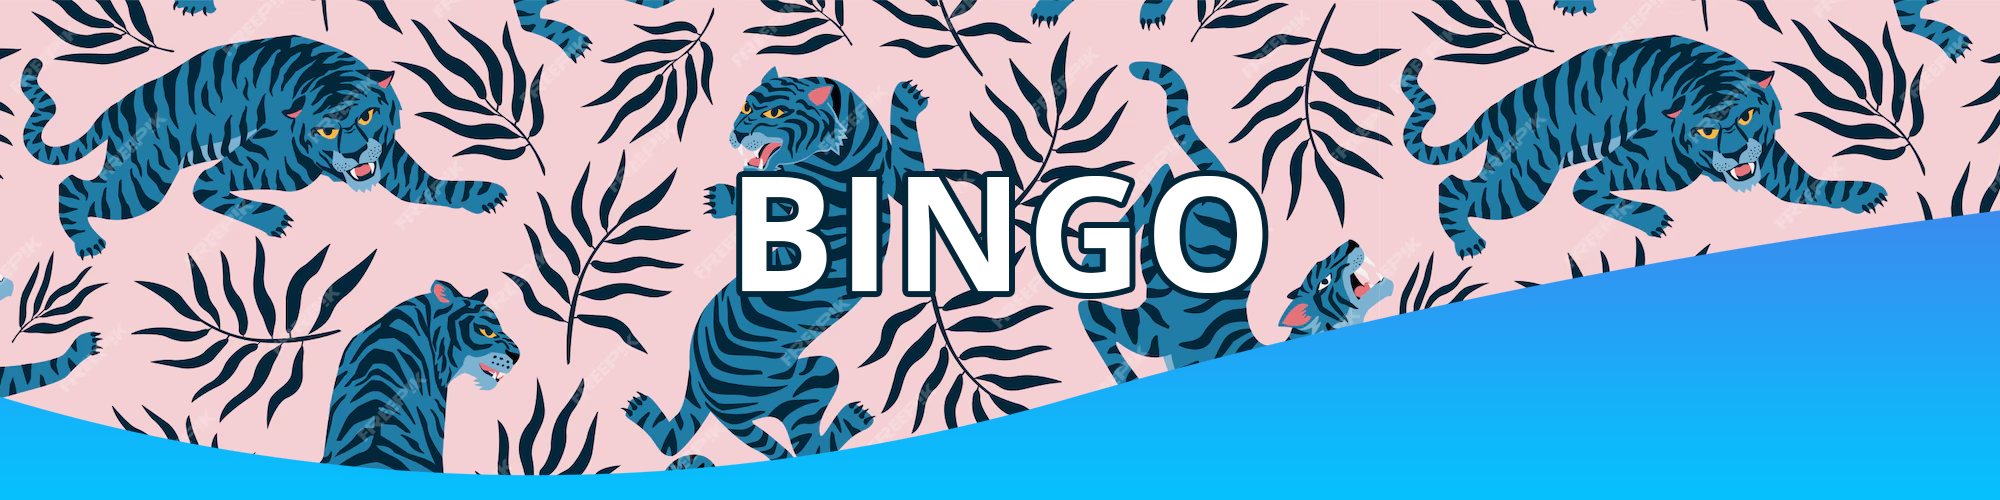 Tiger Bingo Alternative on EazeGames